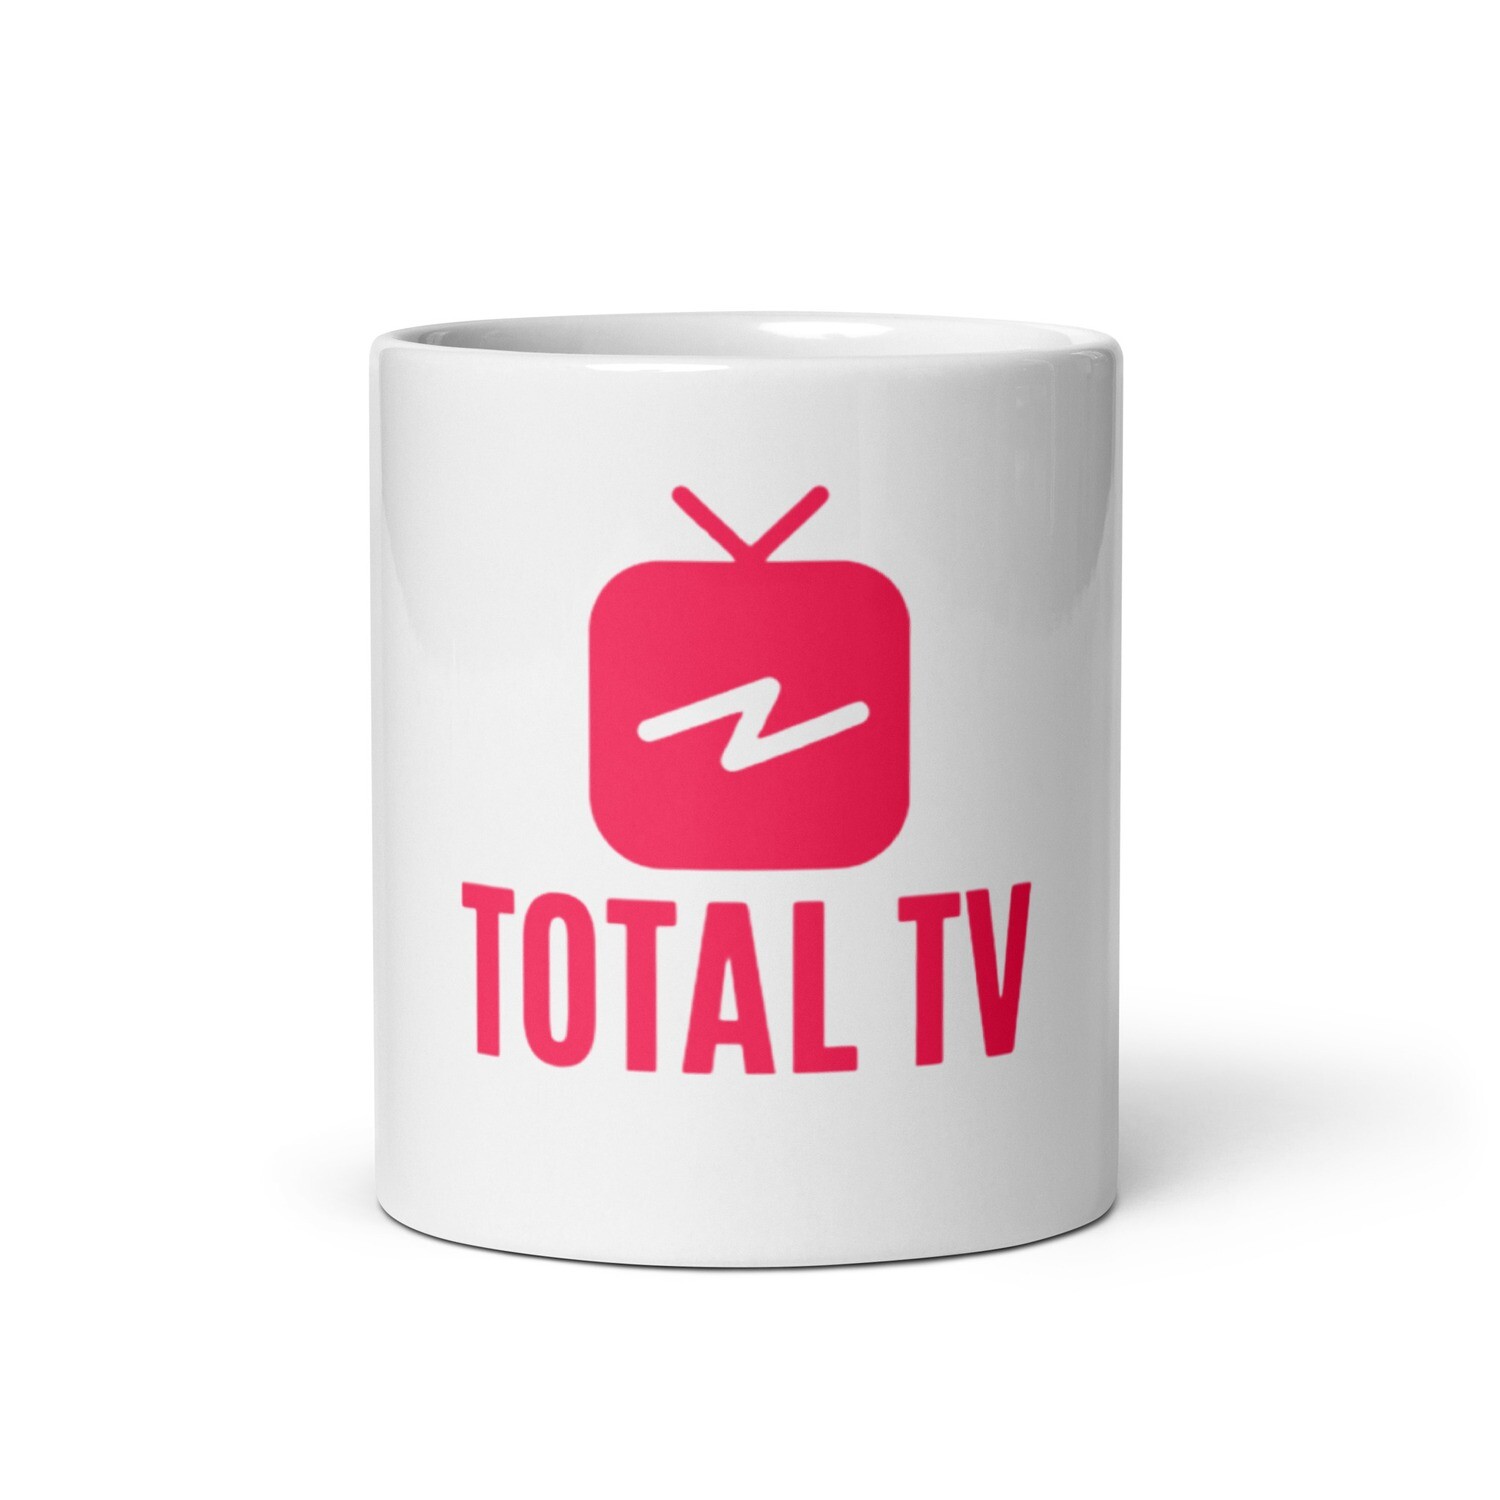 TotalTV White glossy mug